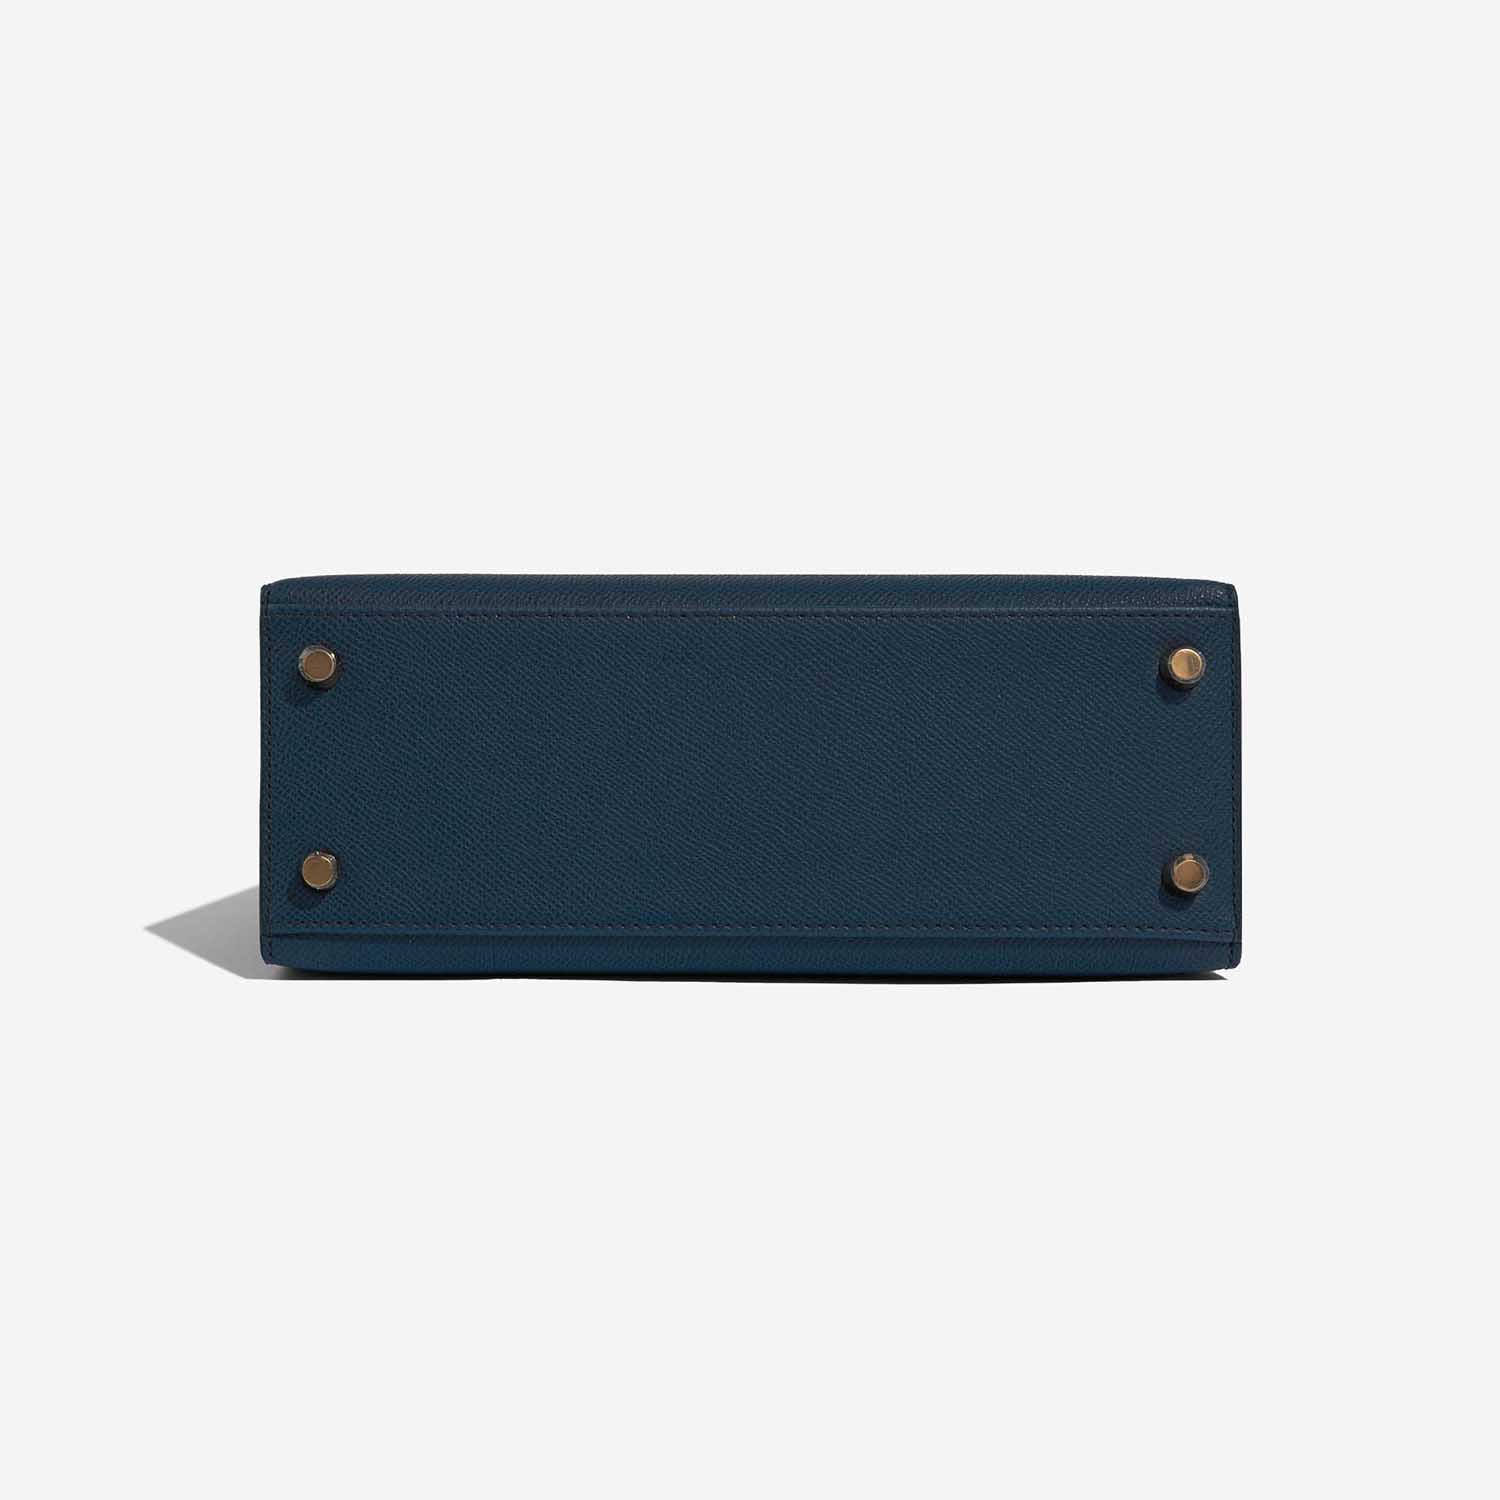 Hermes Hermès Kelly 25 Blue Leather Handbag ()